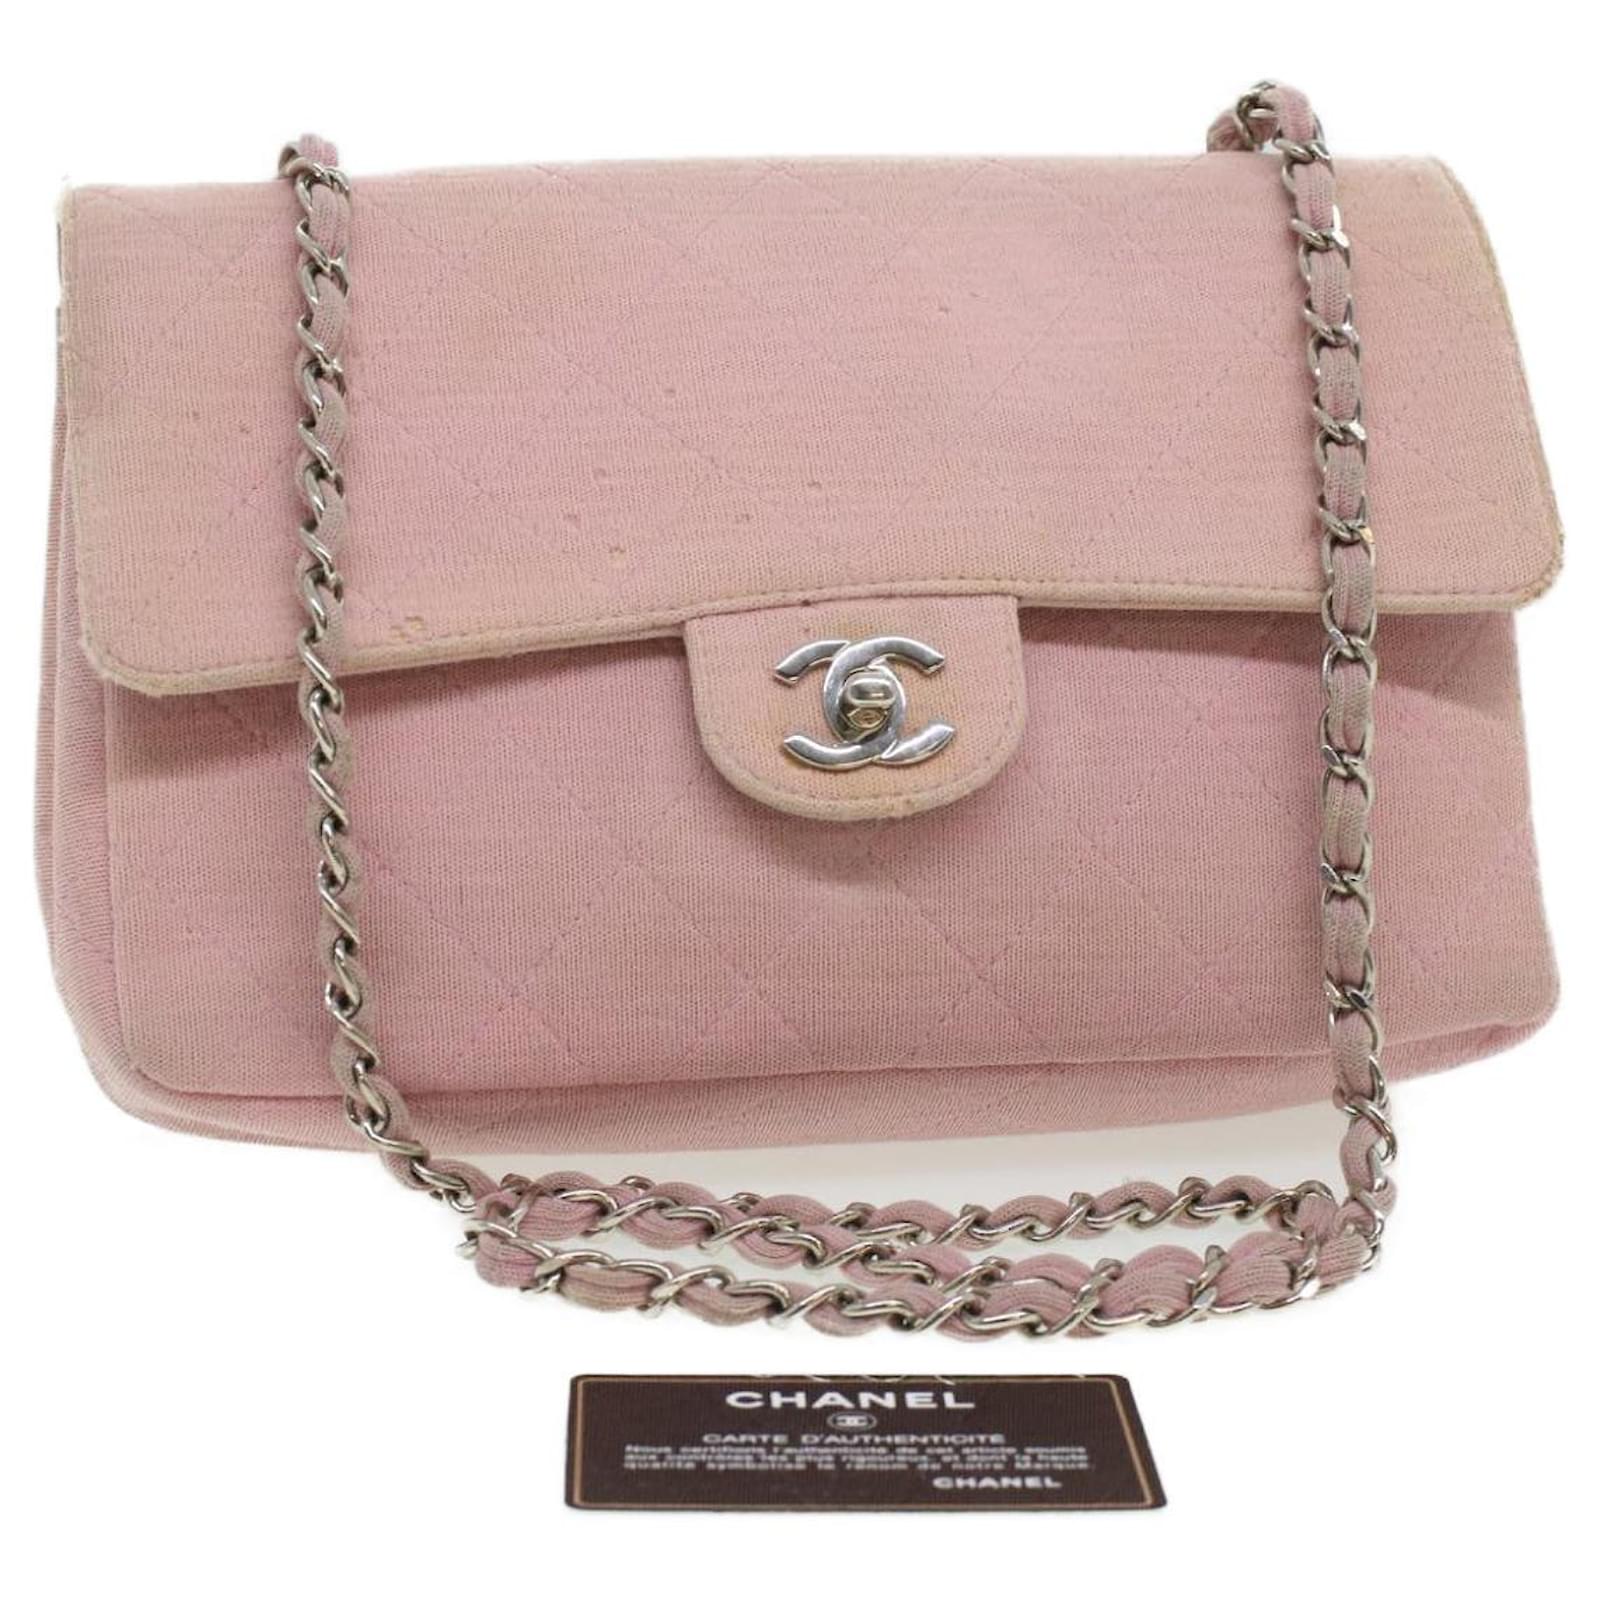 Pink Chanel Handbag - Shop on Pinterest